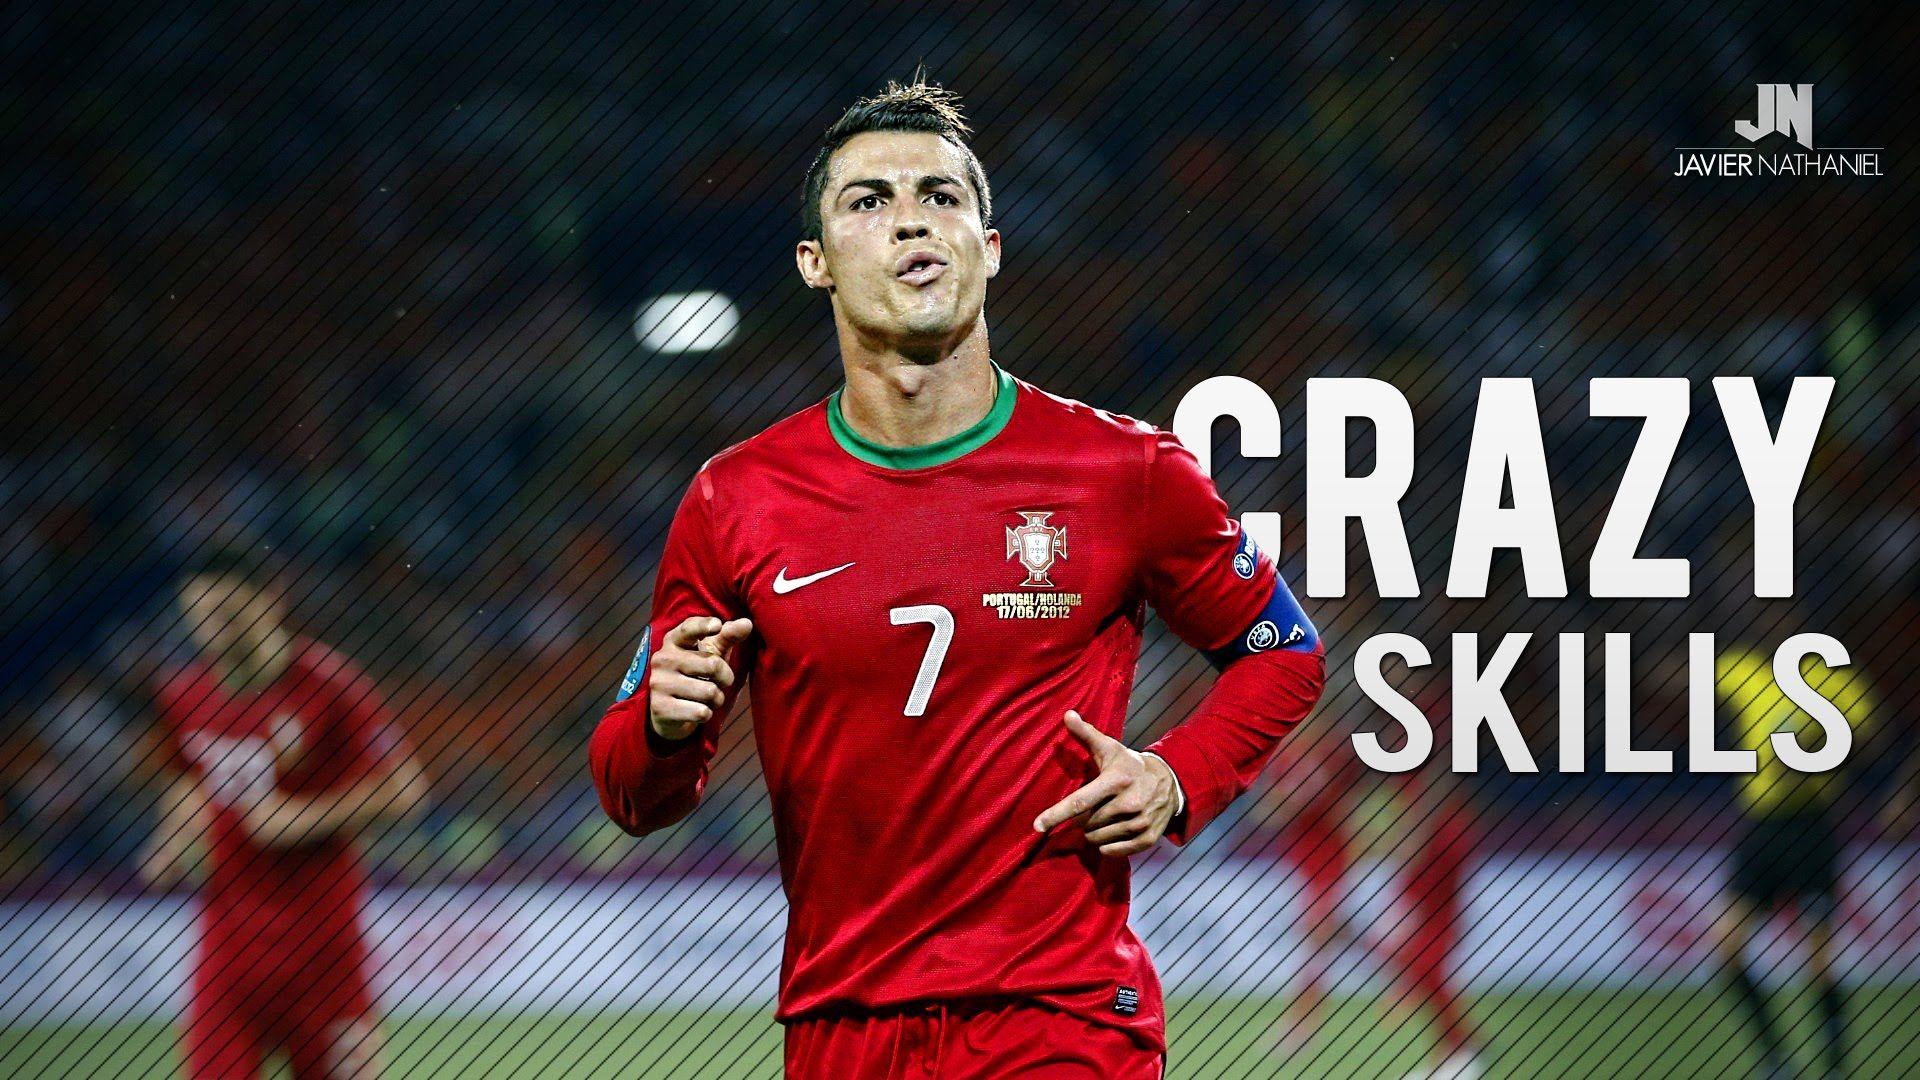 Cristiano Ronaldo ○ Crazy Skills & Goals ○ Portugal HD